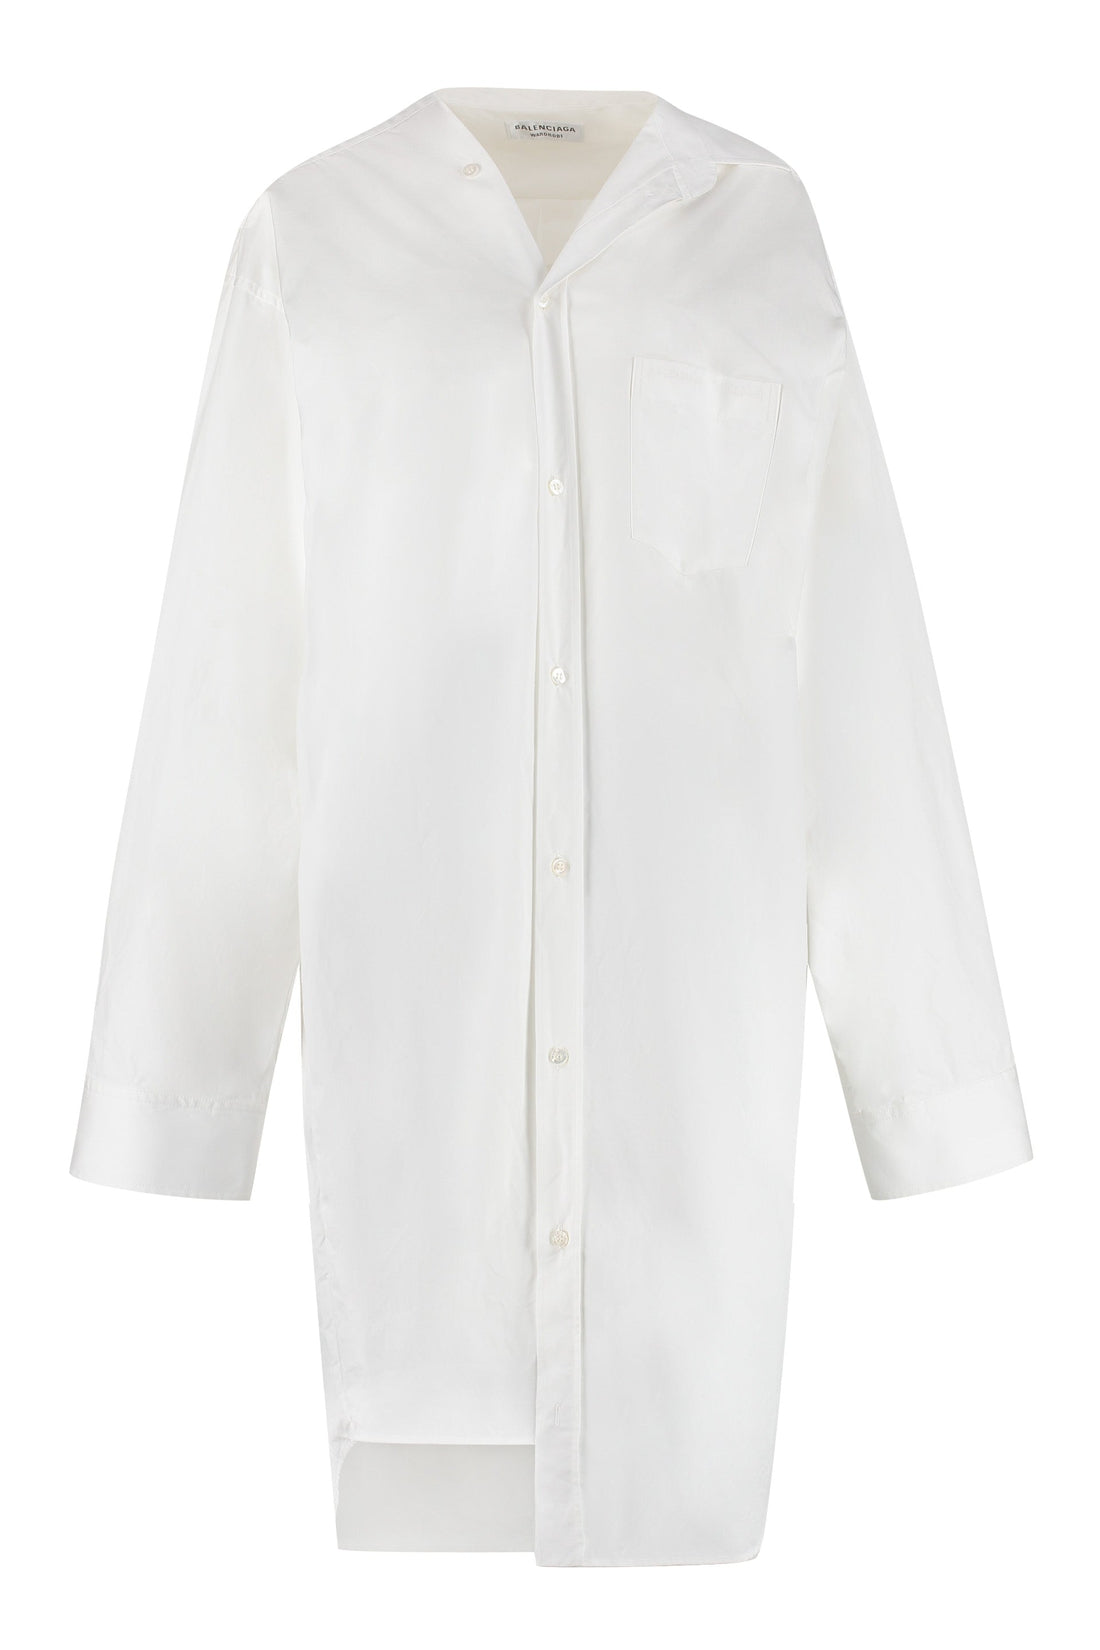 Balenciaga-OUTLET-SALE-Cotton shirtdress-ARCHIVIST